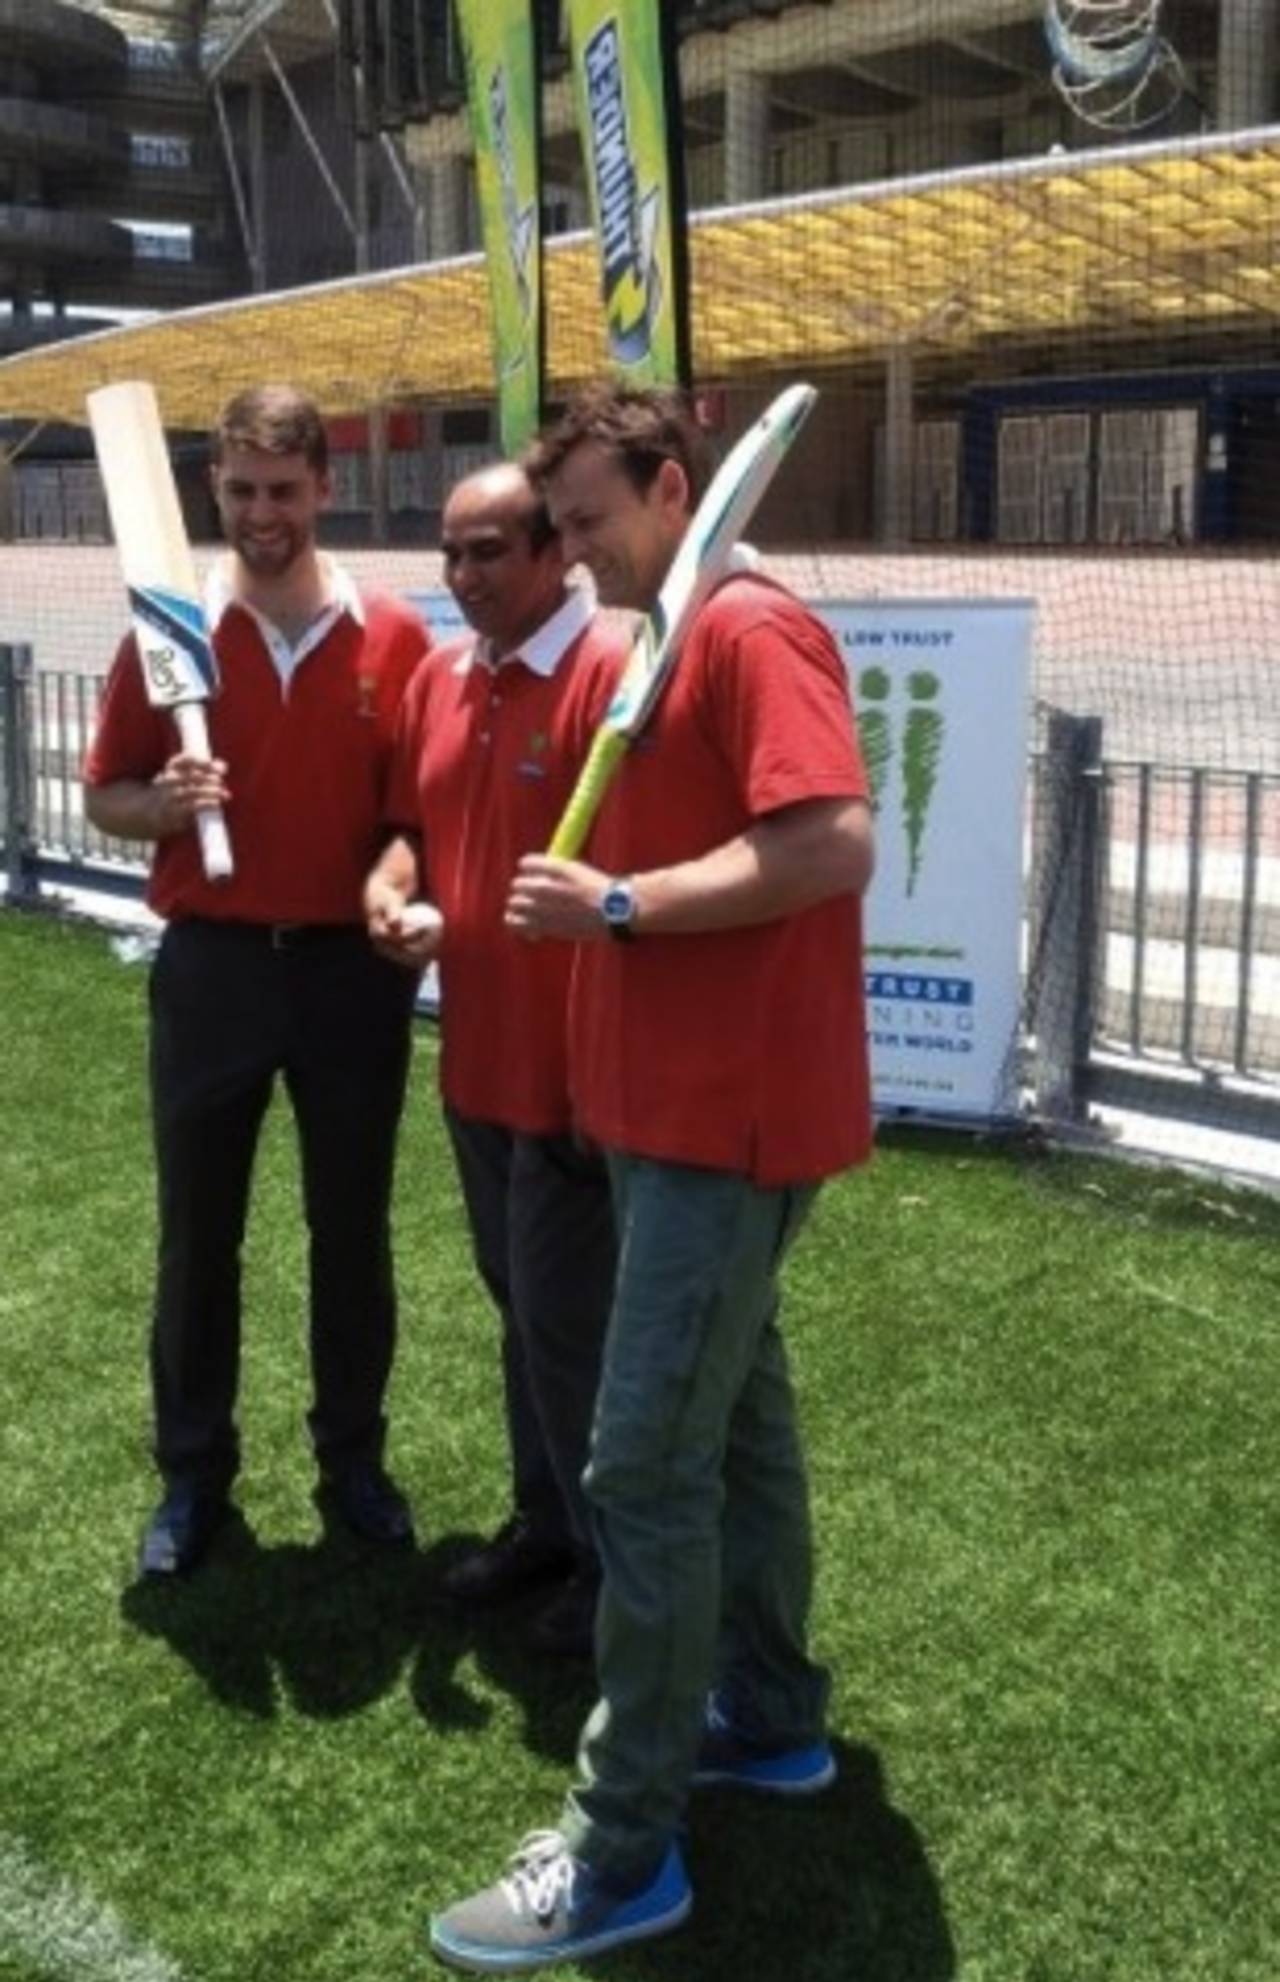 Sydney Thunder wicketkeeper Ryan Carters, LBW Trust chairman Darshak Mehta and Adam Gilchrist at the launch of Batting for Change&nbsp;&nbsp;&bull;&nbsp;&nbsp;Peter Lovitt/Driver Avenue Group